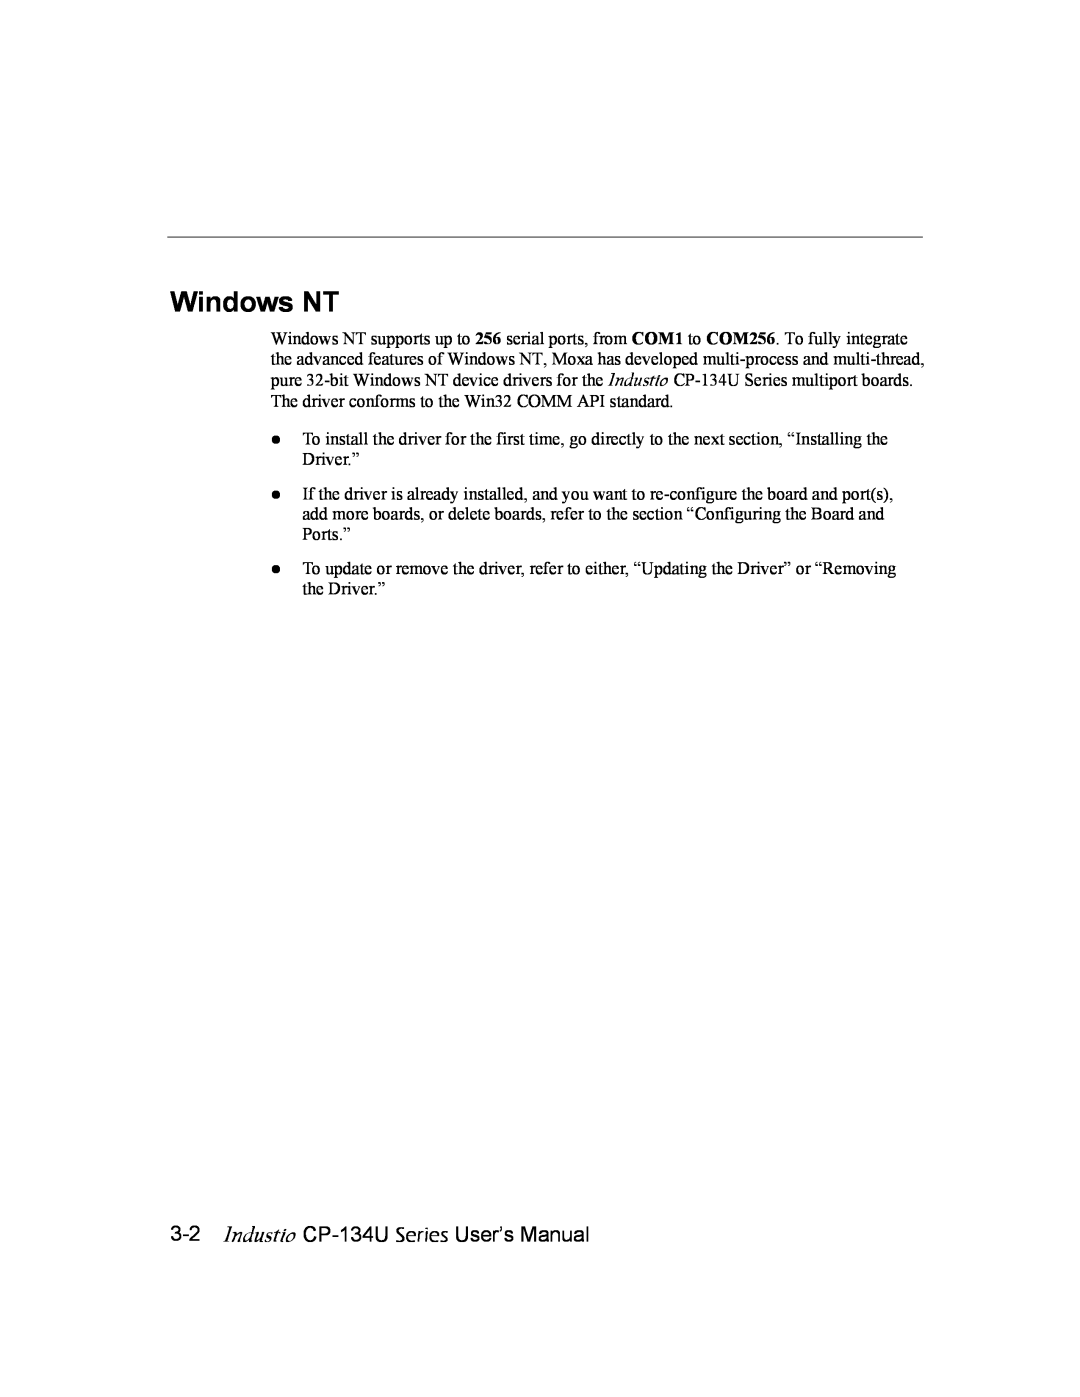 Moxa Technologies user manual Windows NT, Industio CP-134U Series User’s Manual 